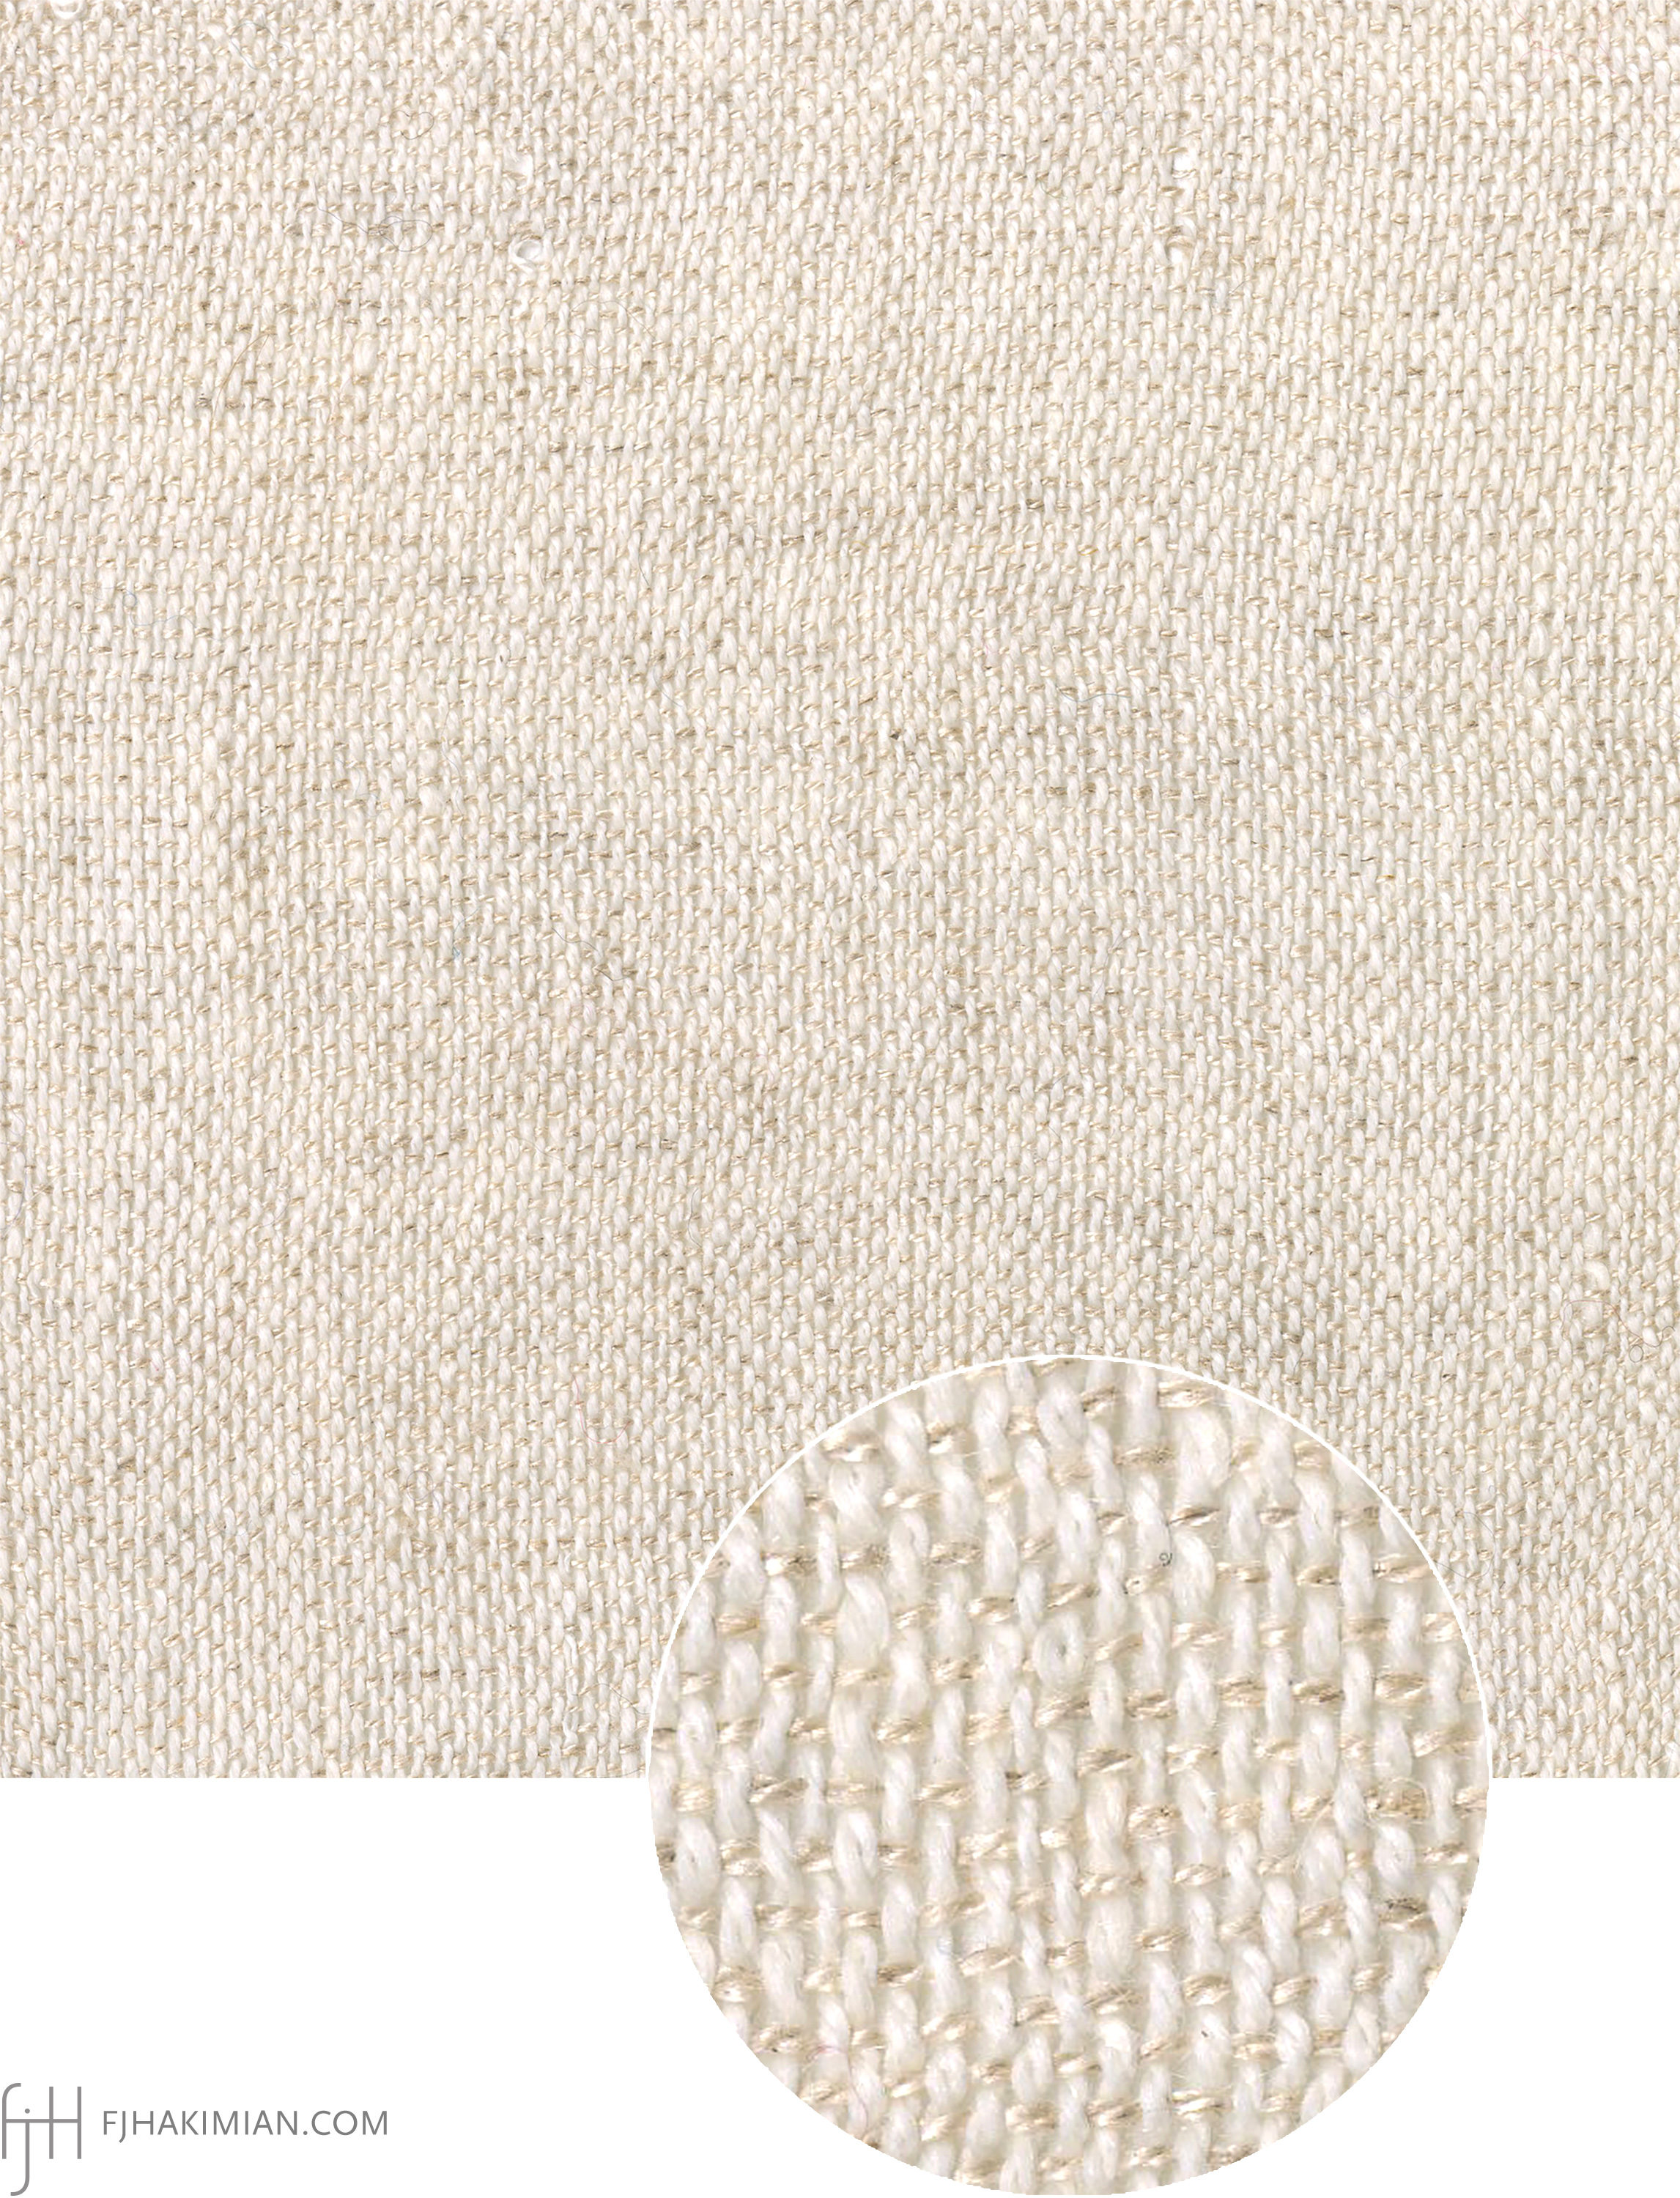 AB-LI-9 Upholstery Fabric | FJ Hakimian Carpet Gallery, New York 